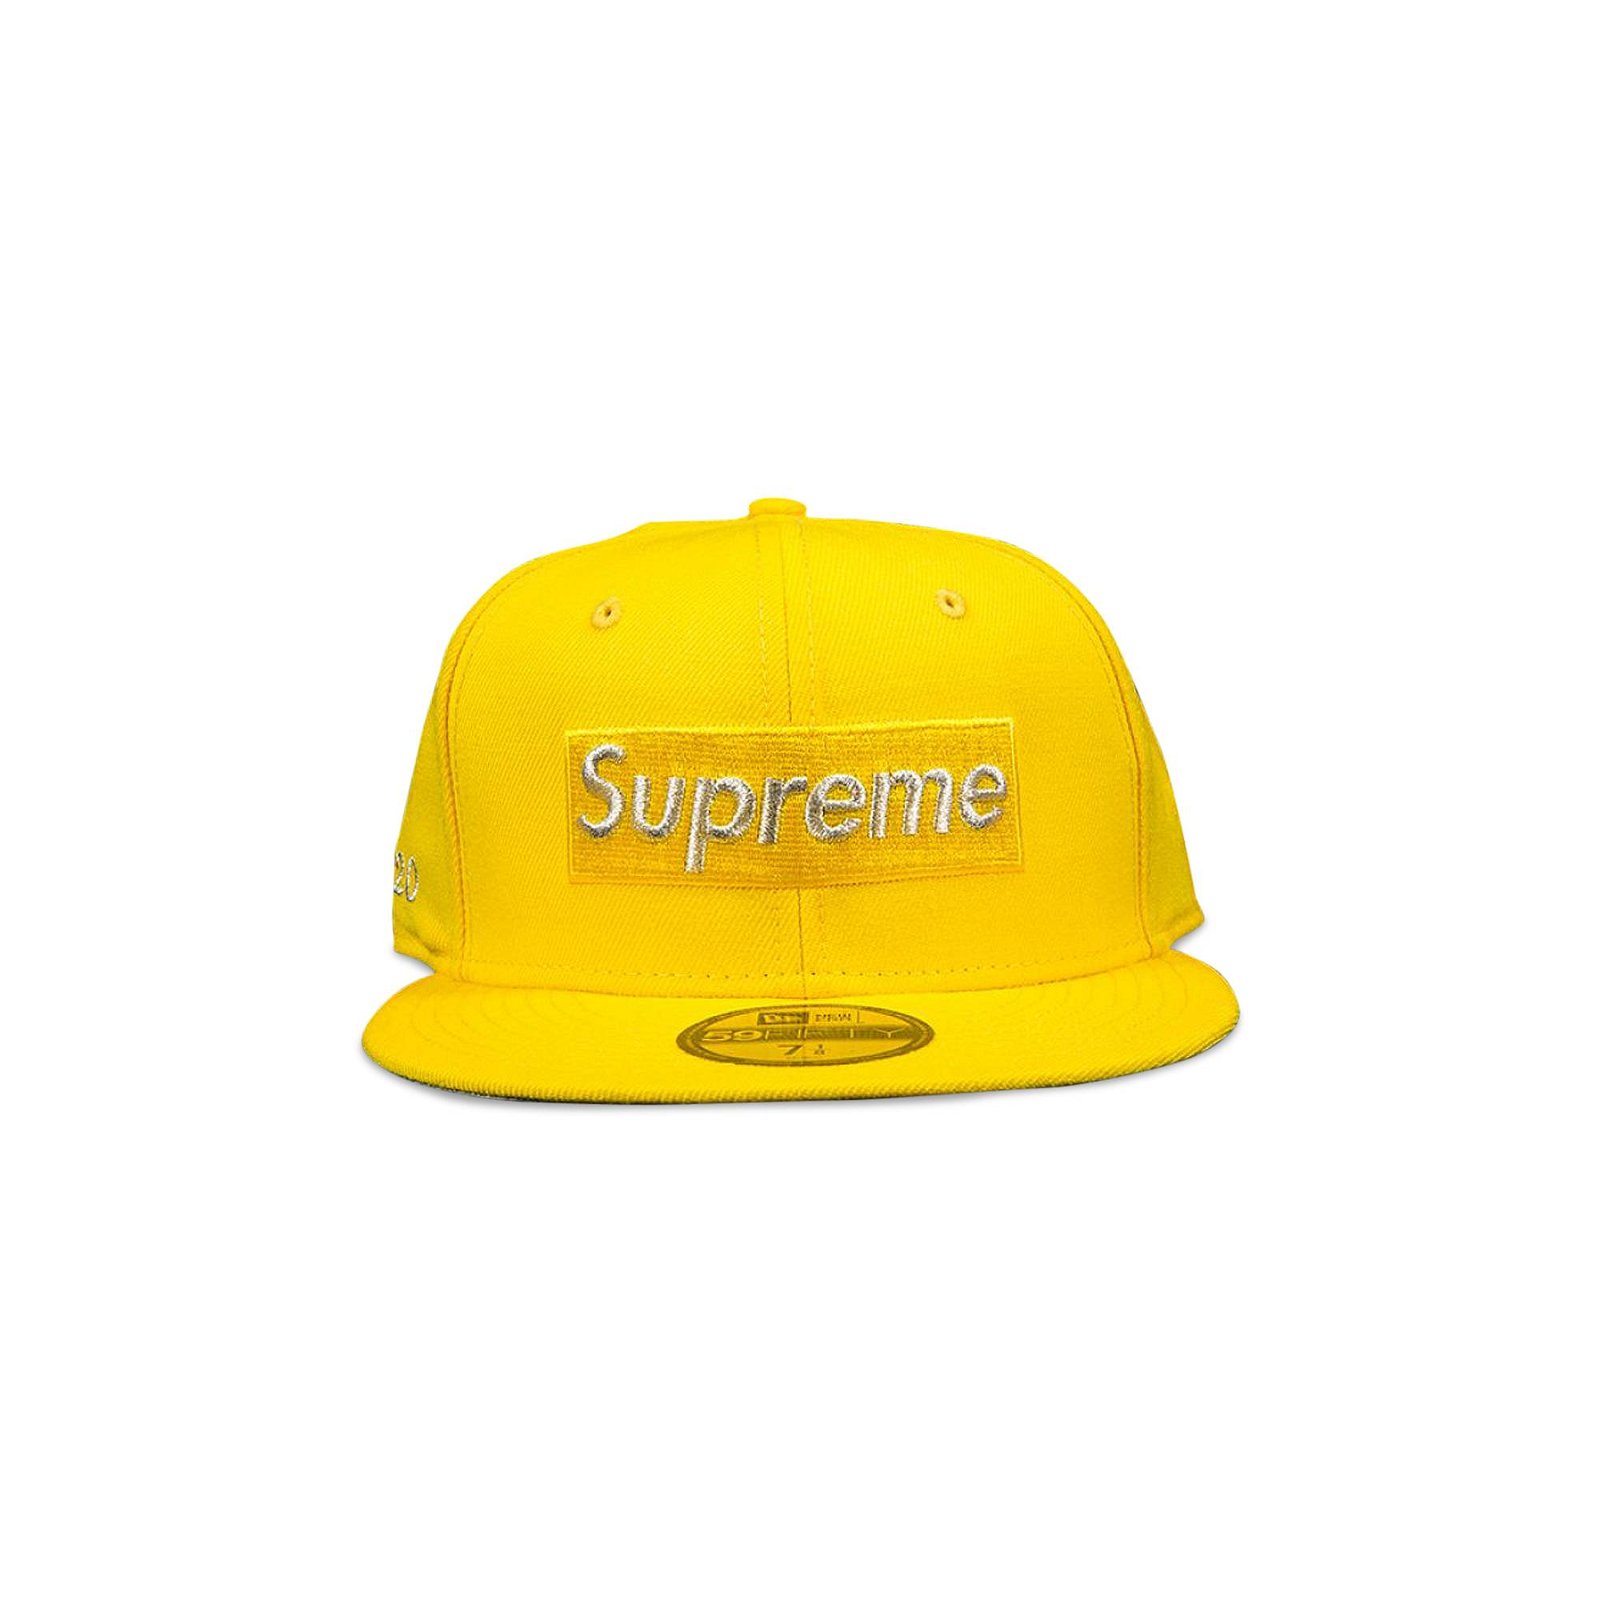 Supreme New Era $1M Metallic Yellow